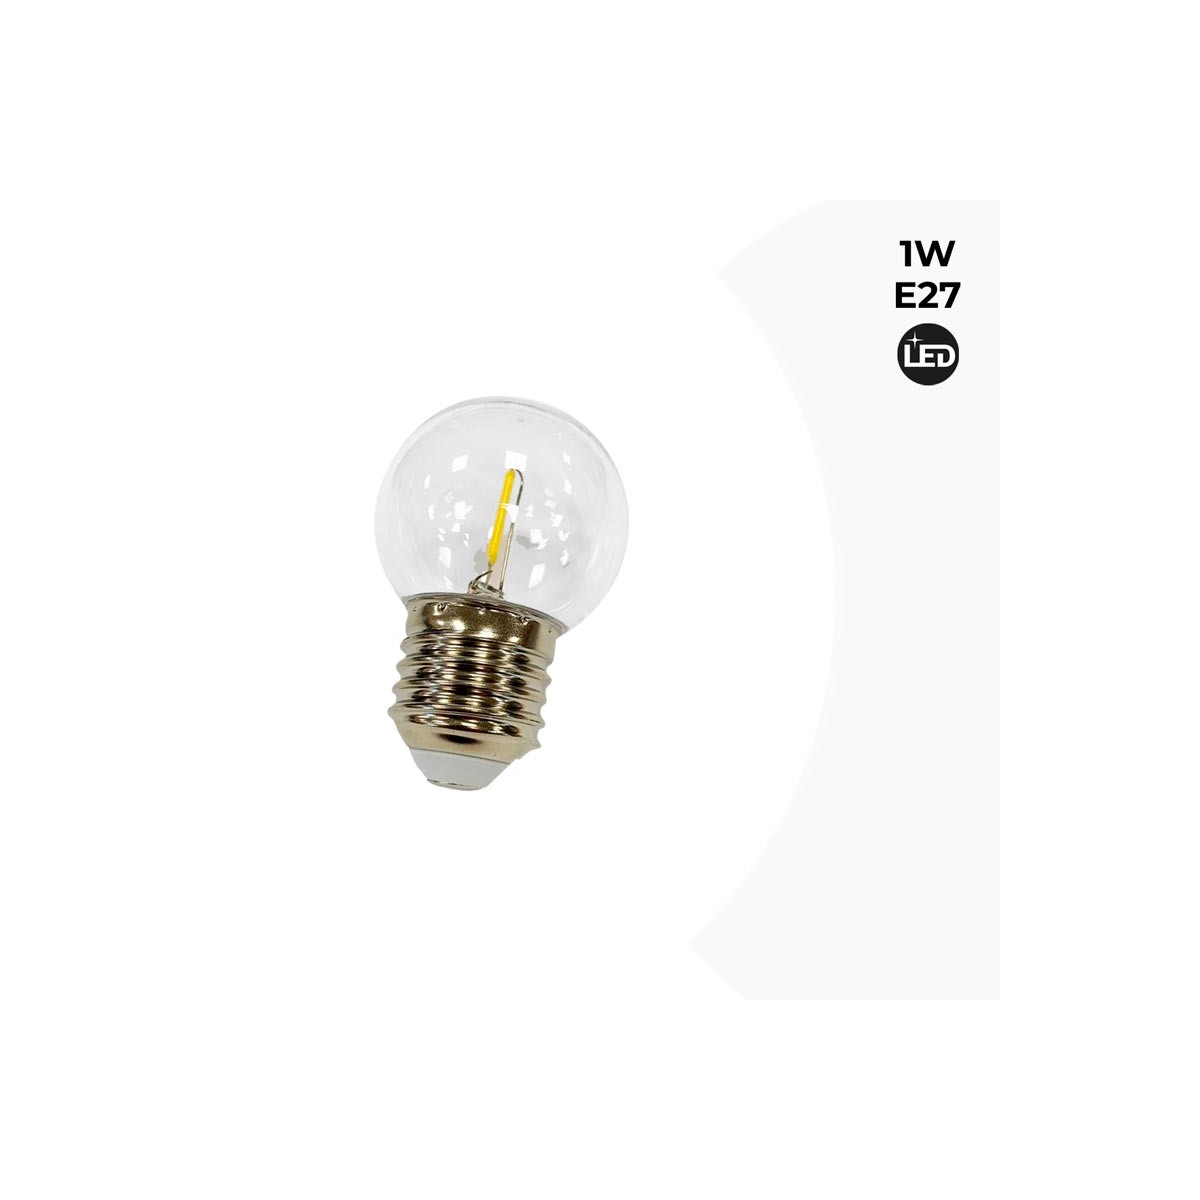 Dekorative LED-Lampe 1W E27